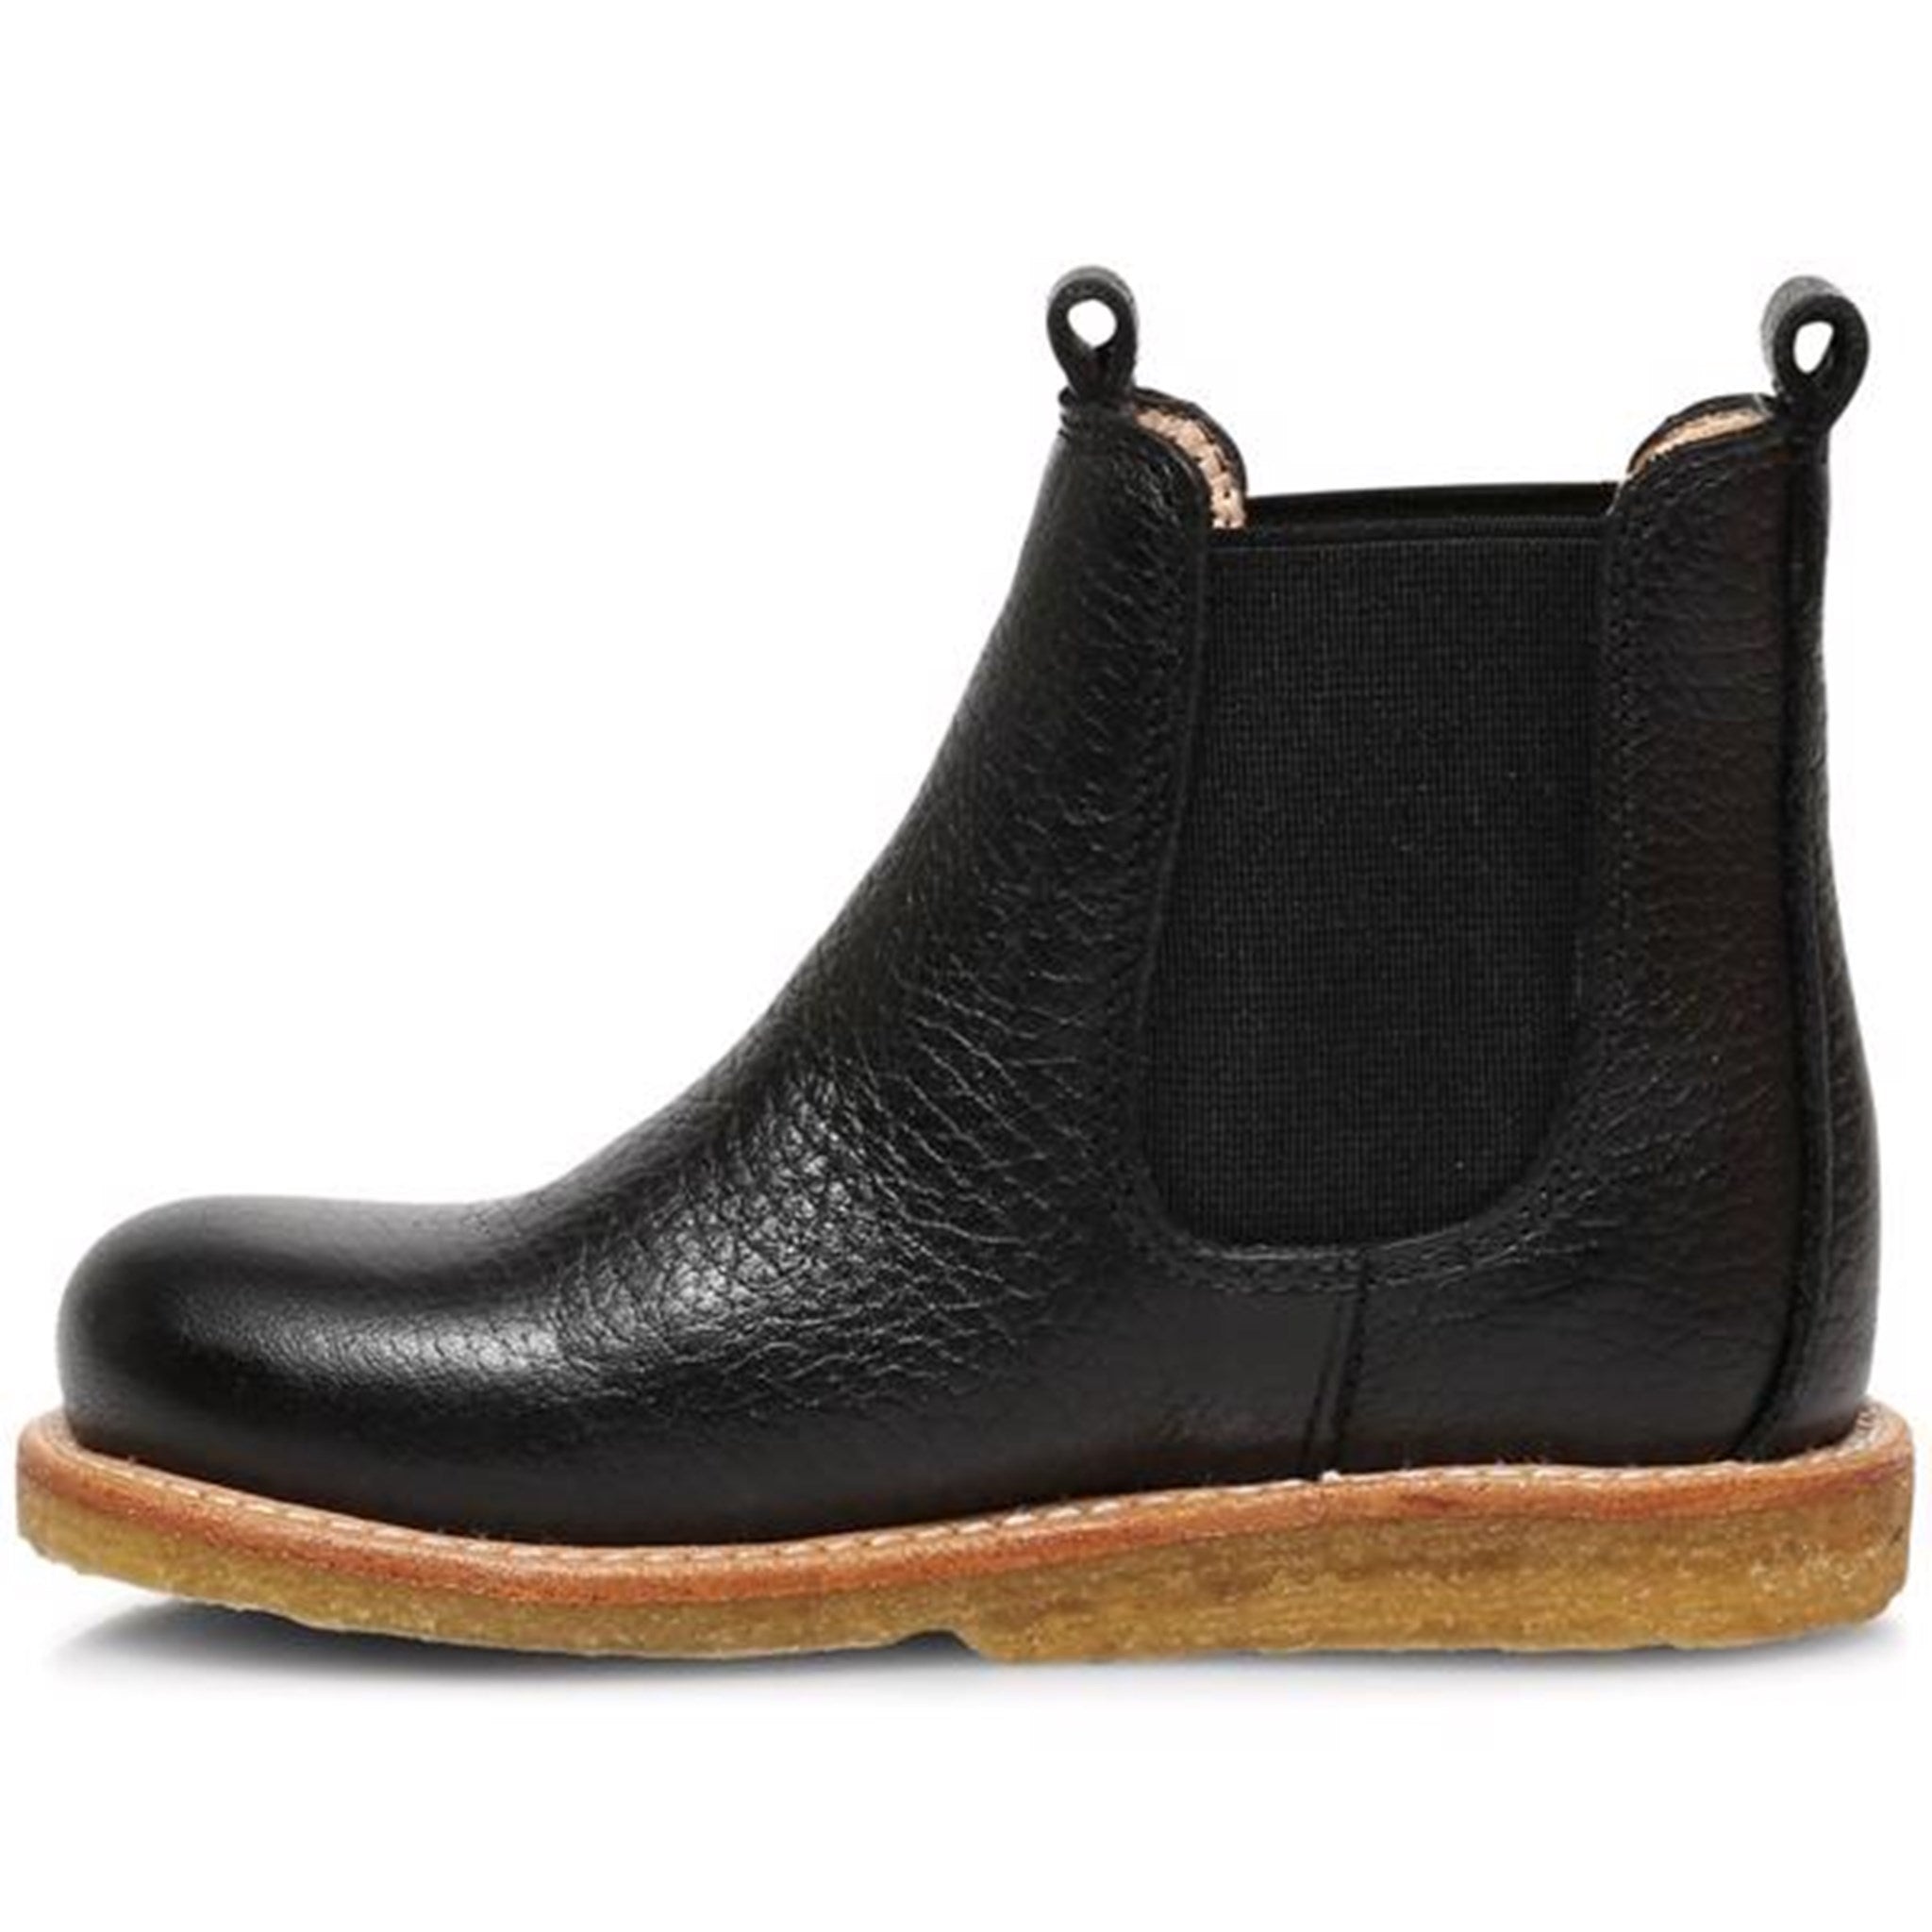 Angulus Chelsea Boots Black 2192-101-0337-1933/001 3